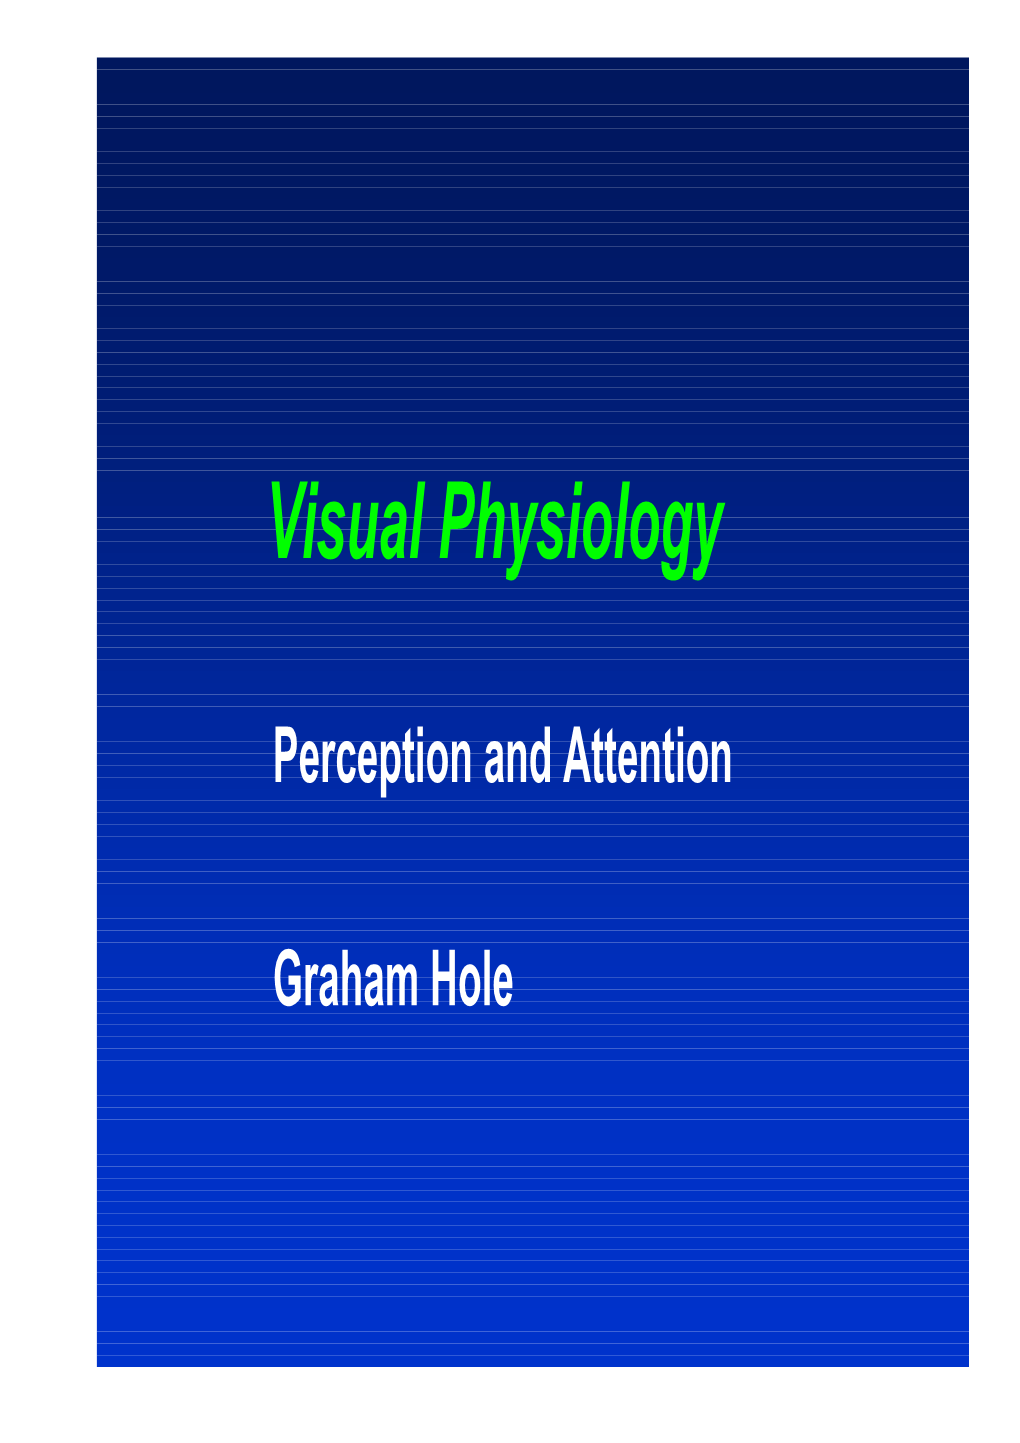 Visual Physiology